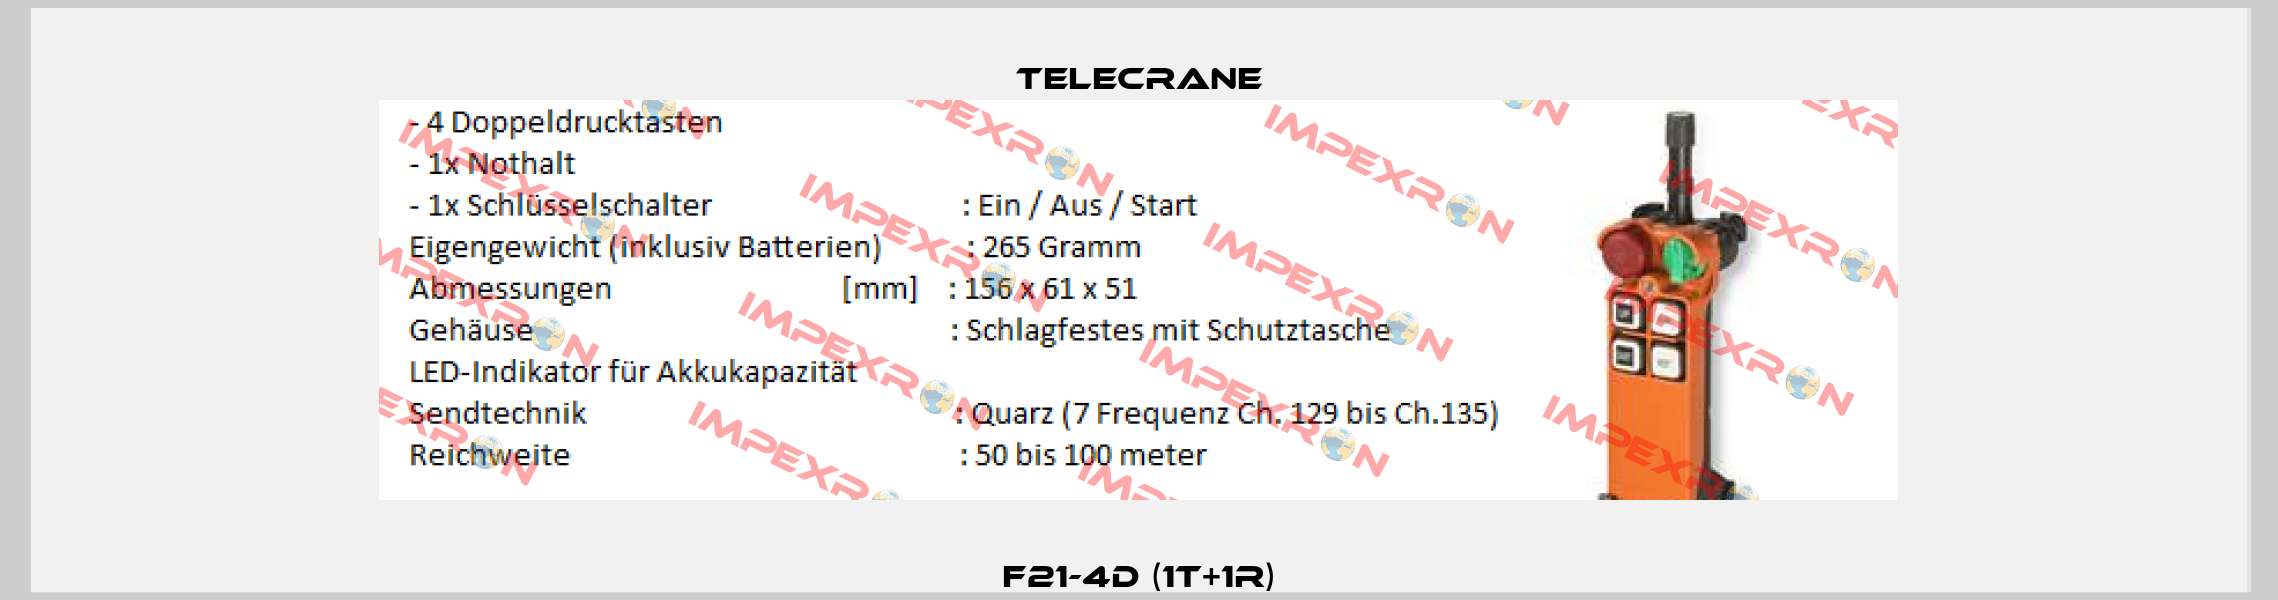 F21-4D (1T+1R) Telecrane